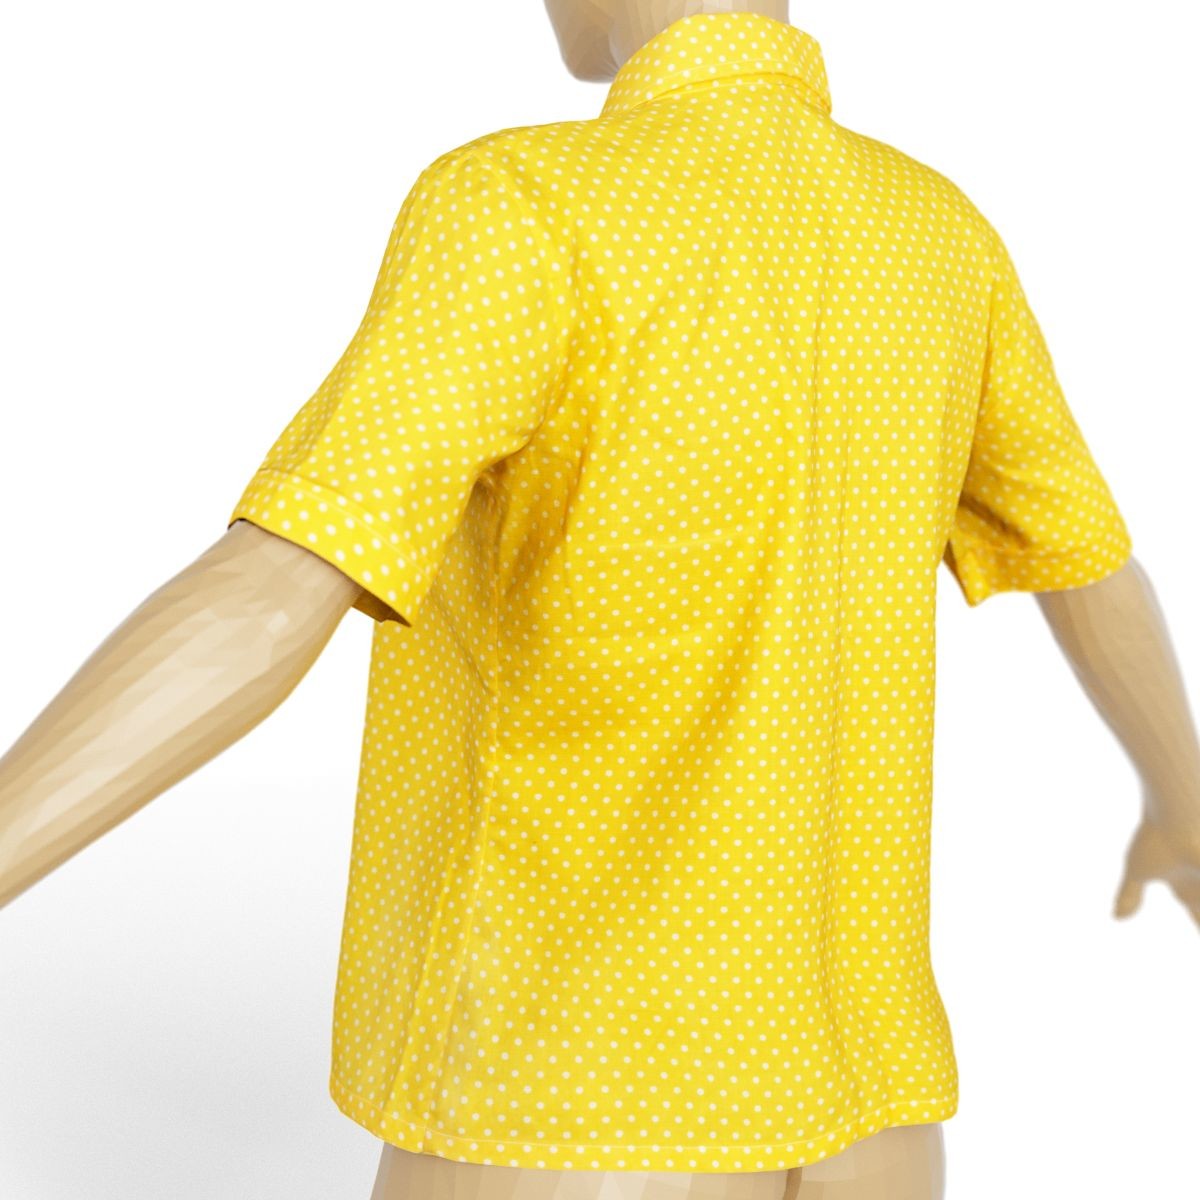 ArtStation - Vintage Shirt Yellow Polka | Resources